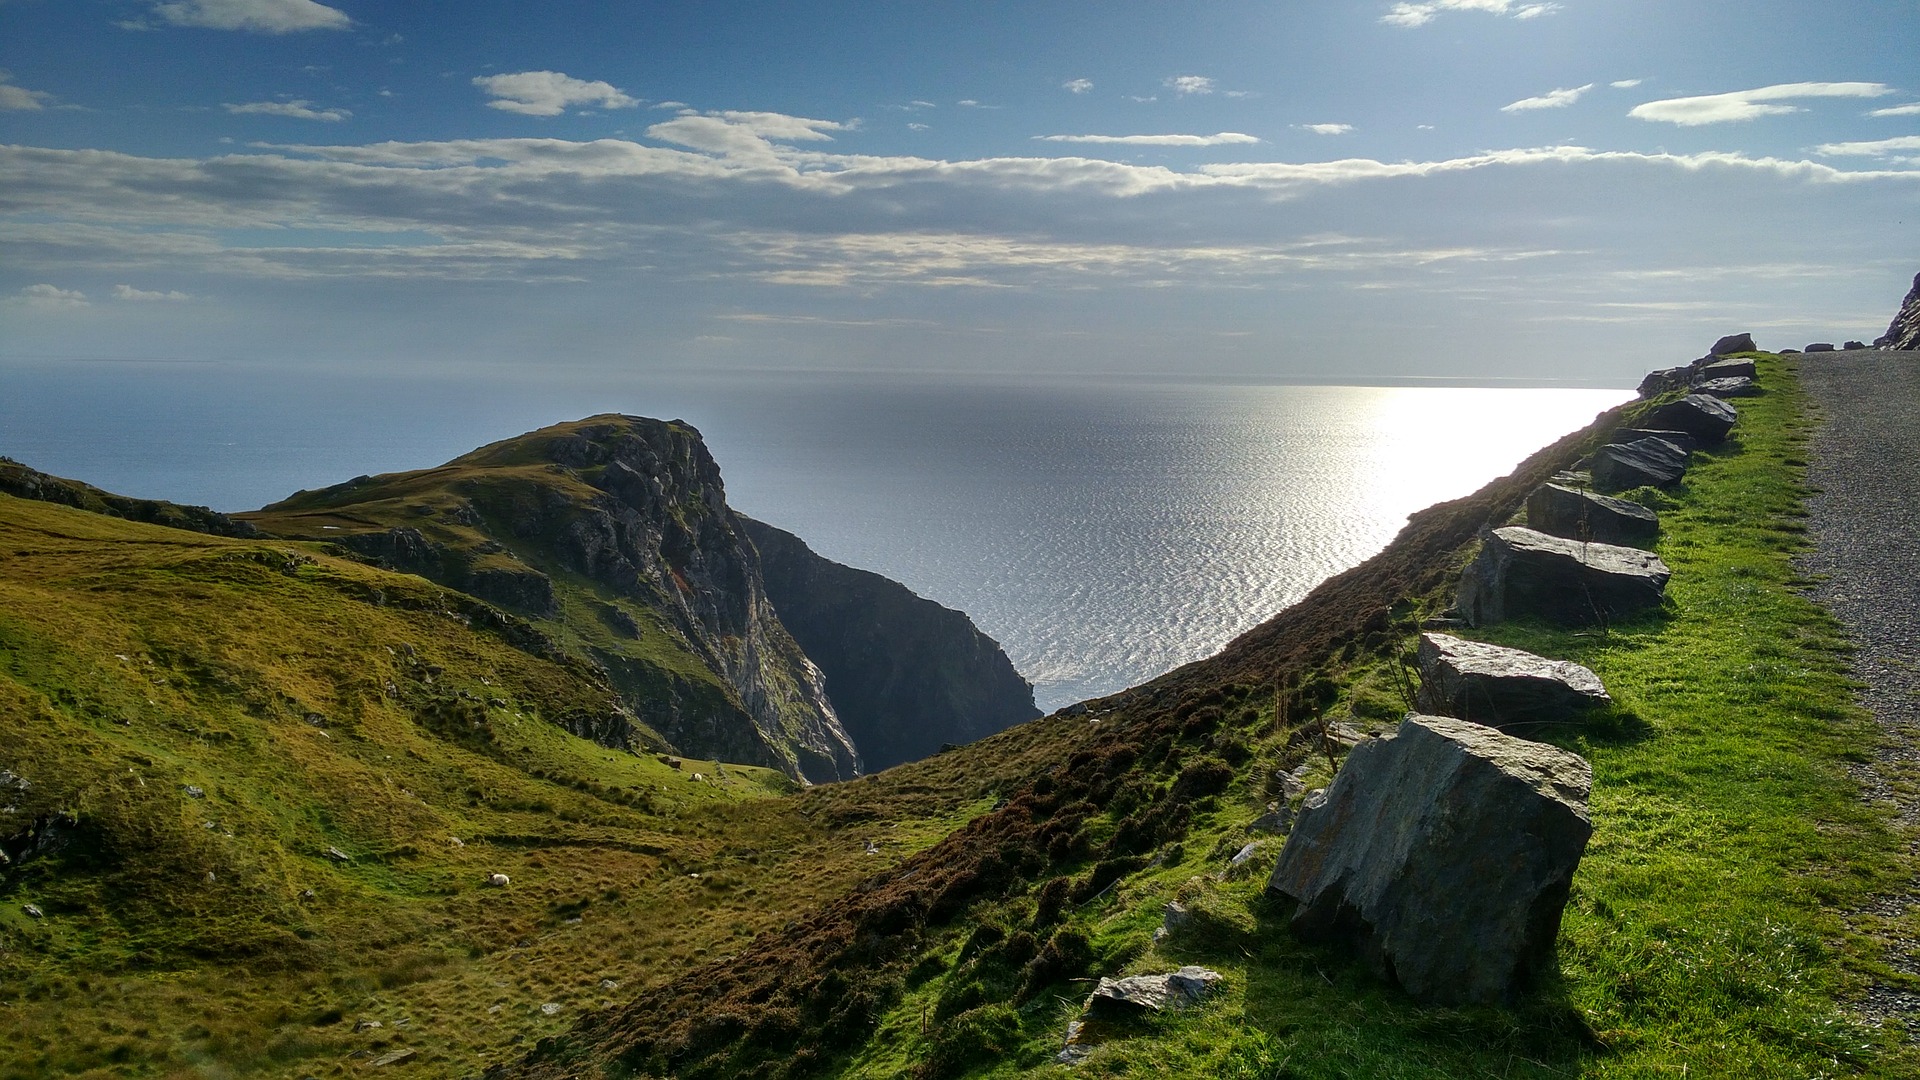  Ireland's Wild Atlantic Way